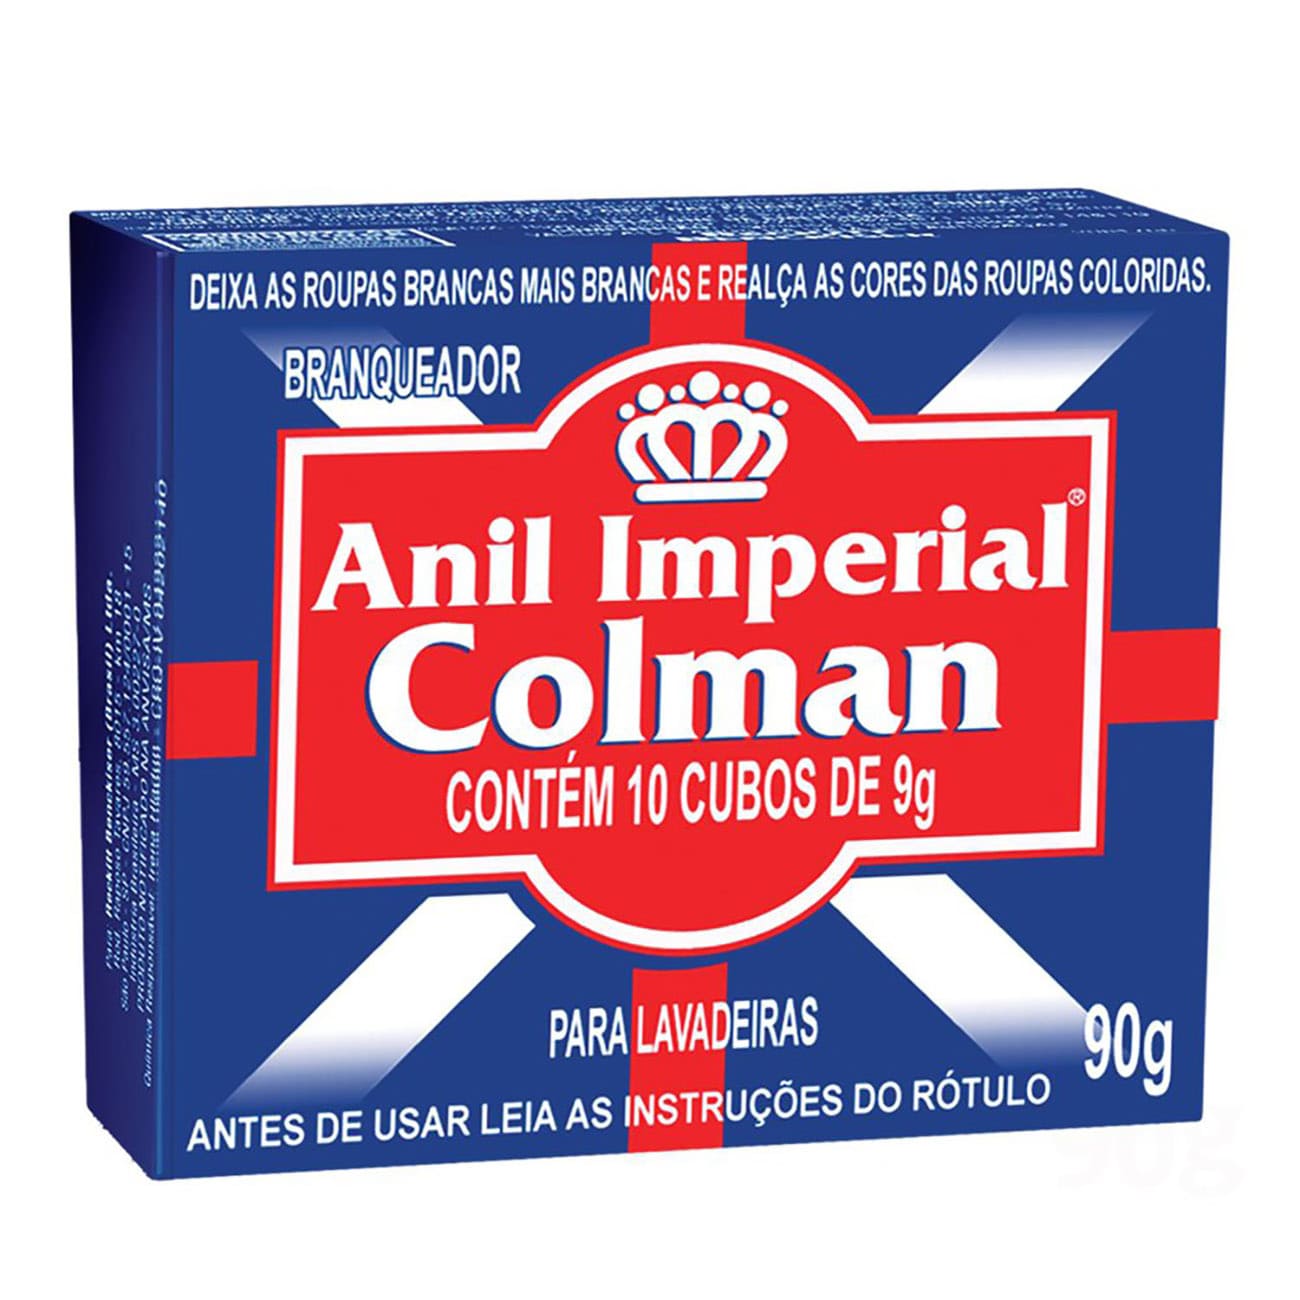 Branqueador Anil Imperial Colman com 10 cubos de 9g cada